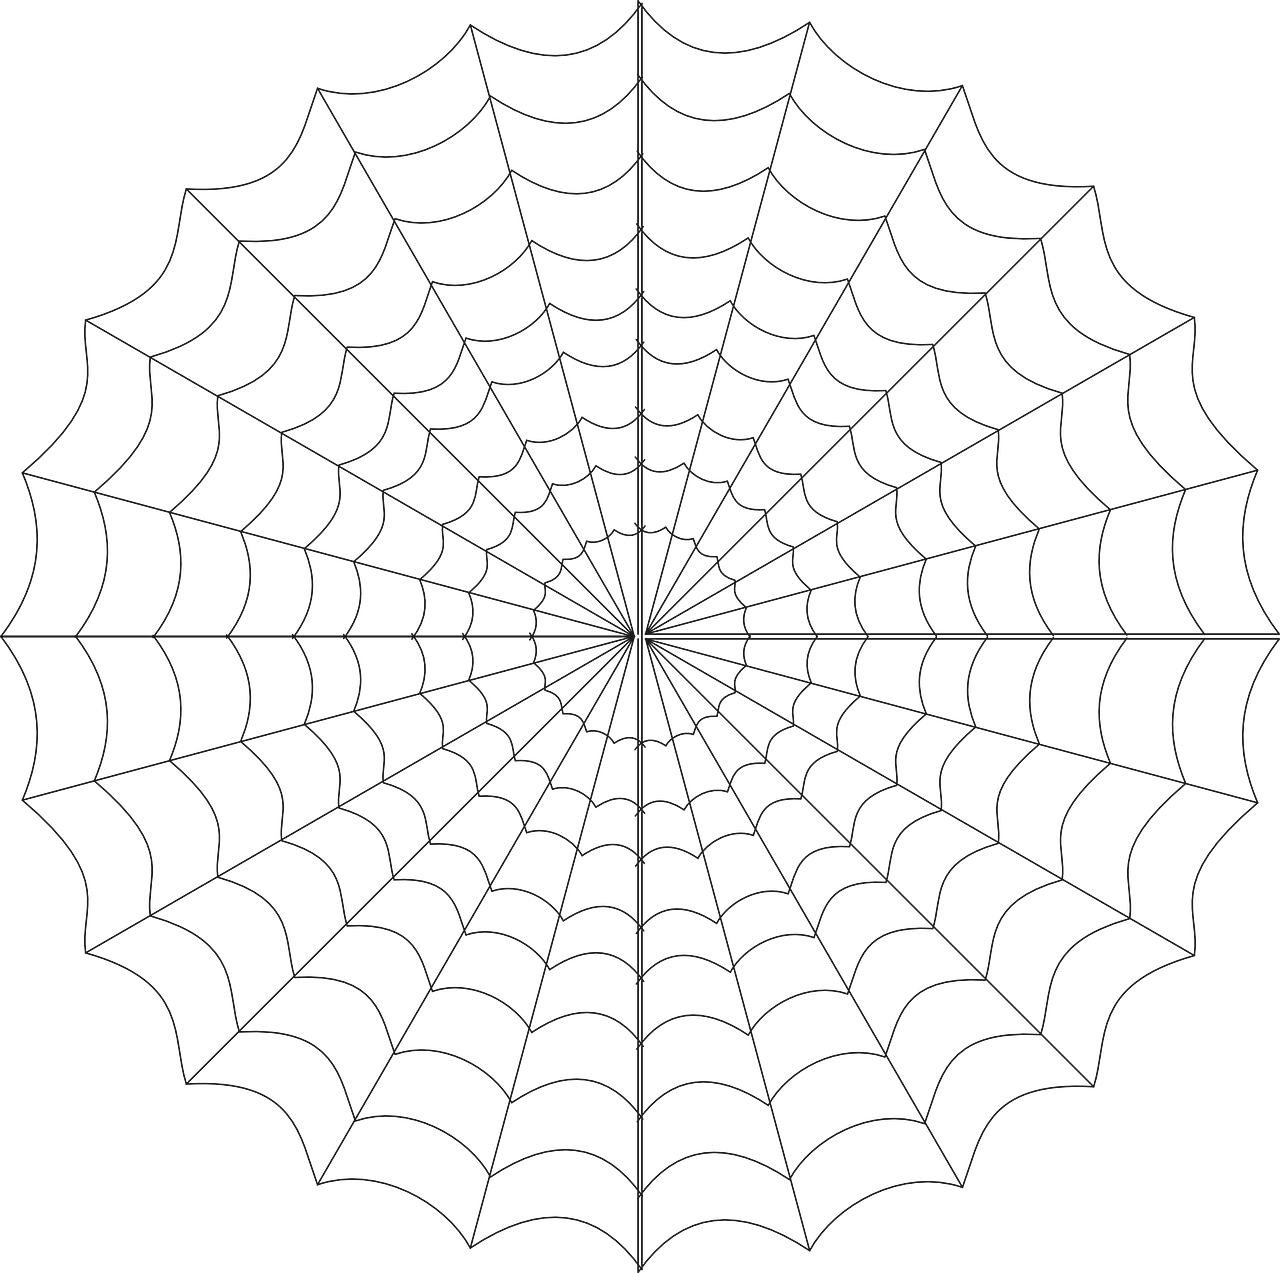 cob web spiderweb spider's web free photo